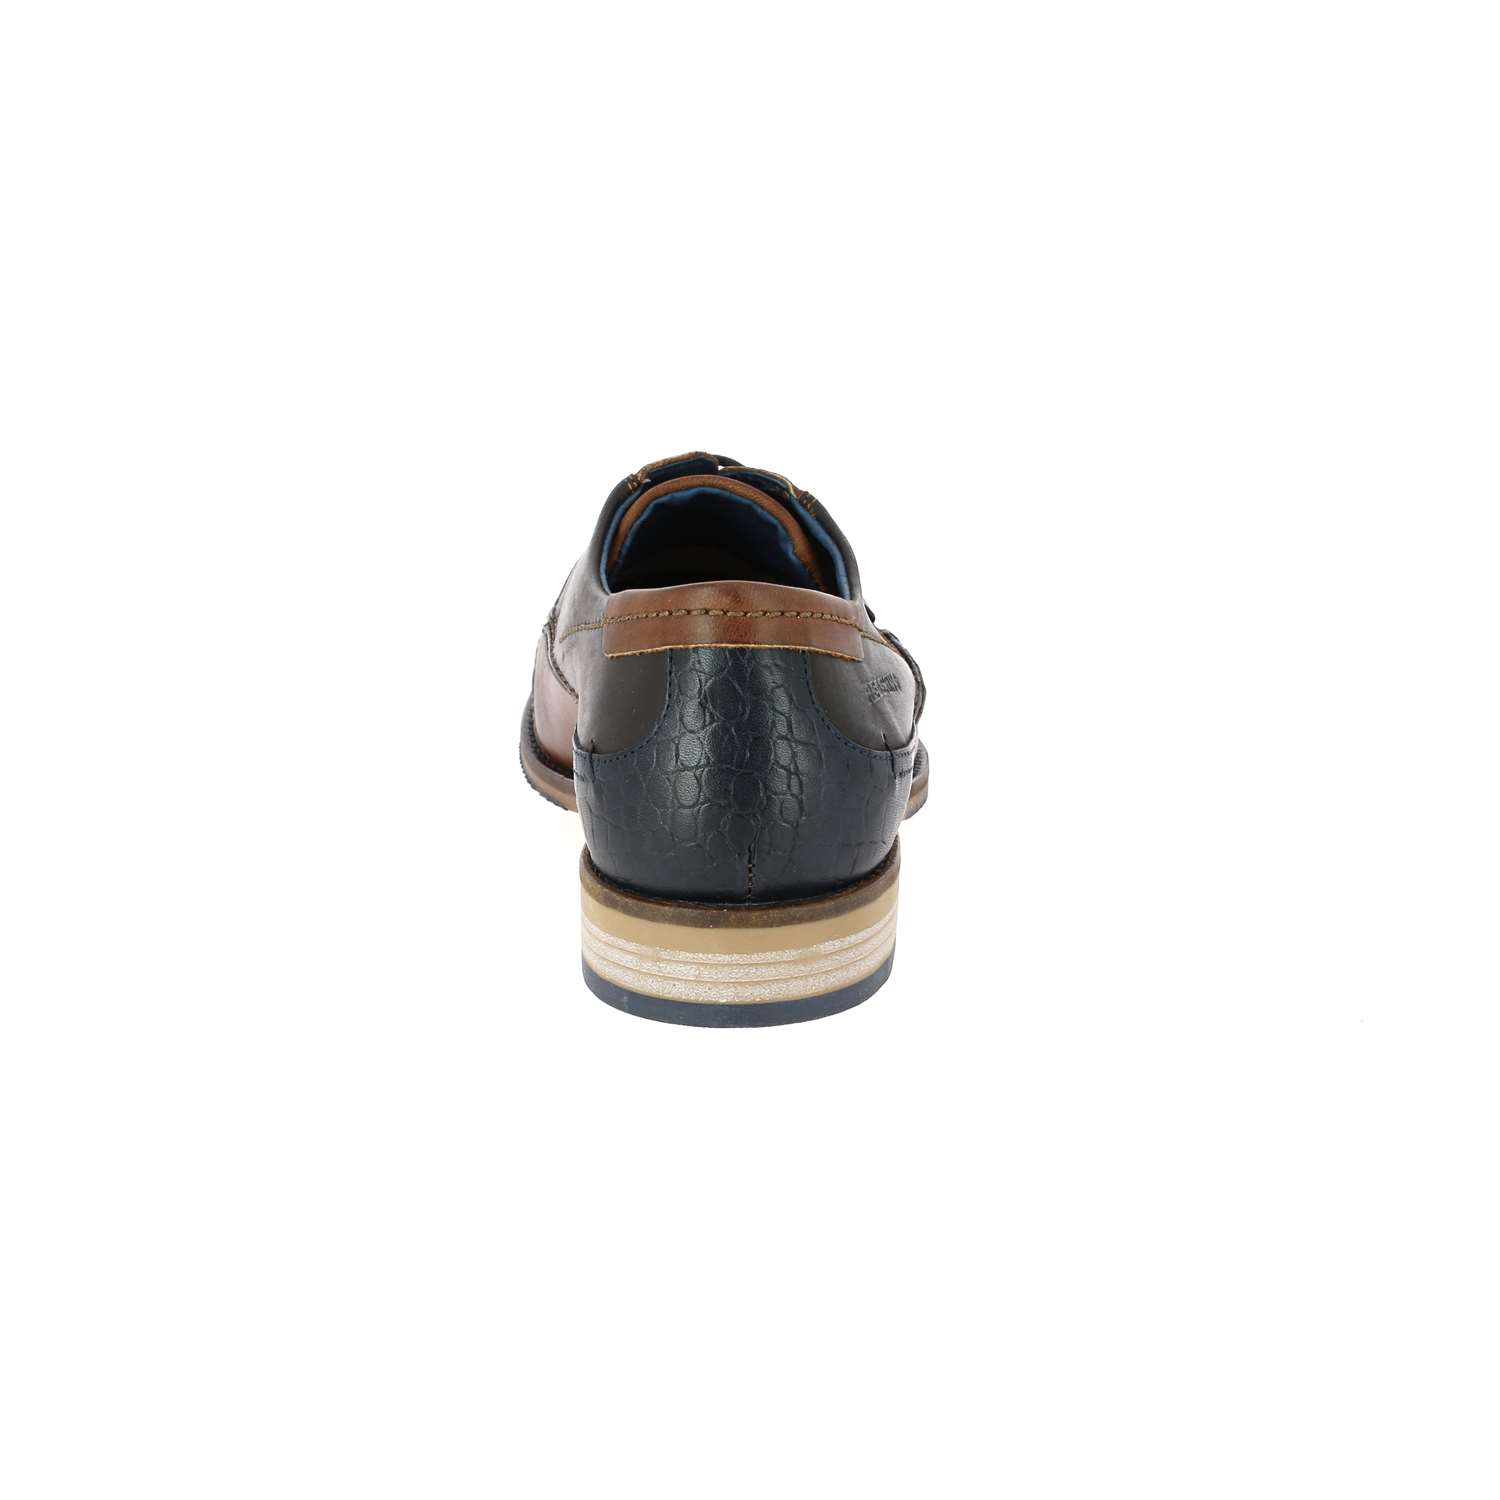 04 - BARBU - CLEON - Chaussures à lacets - Cuir